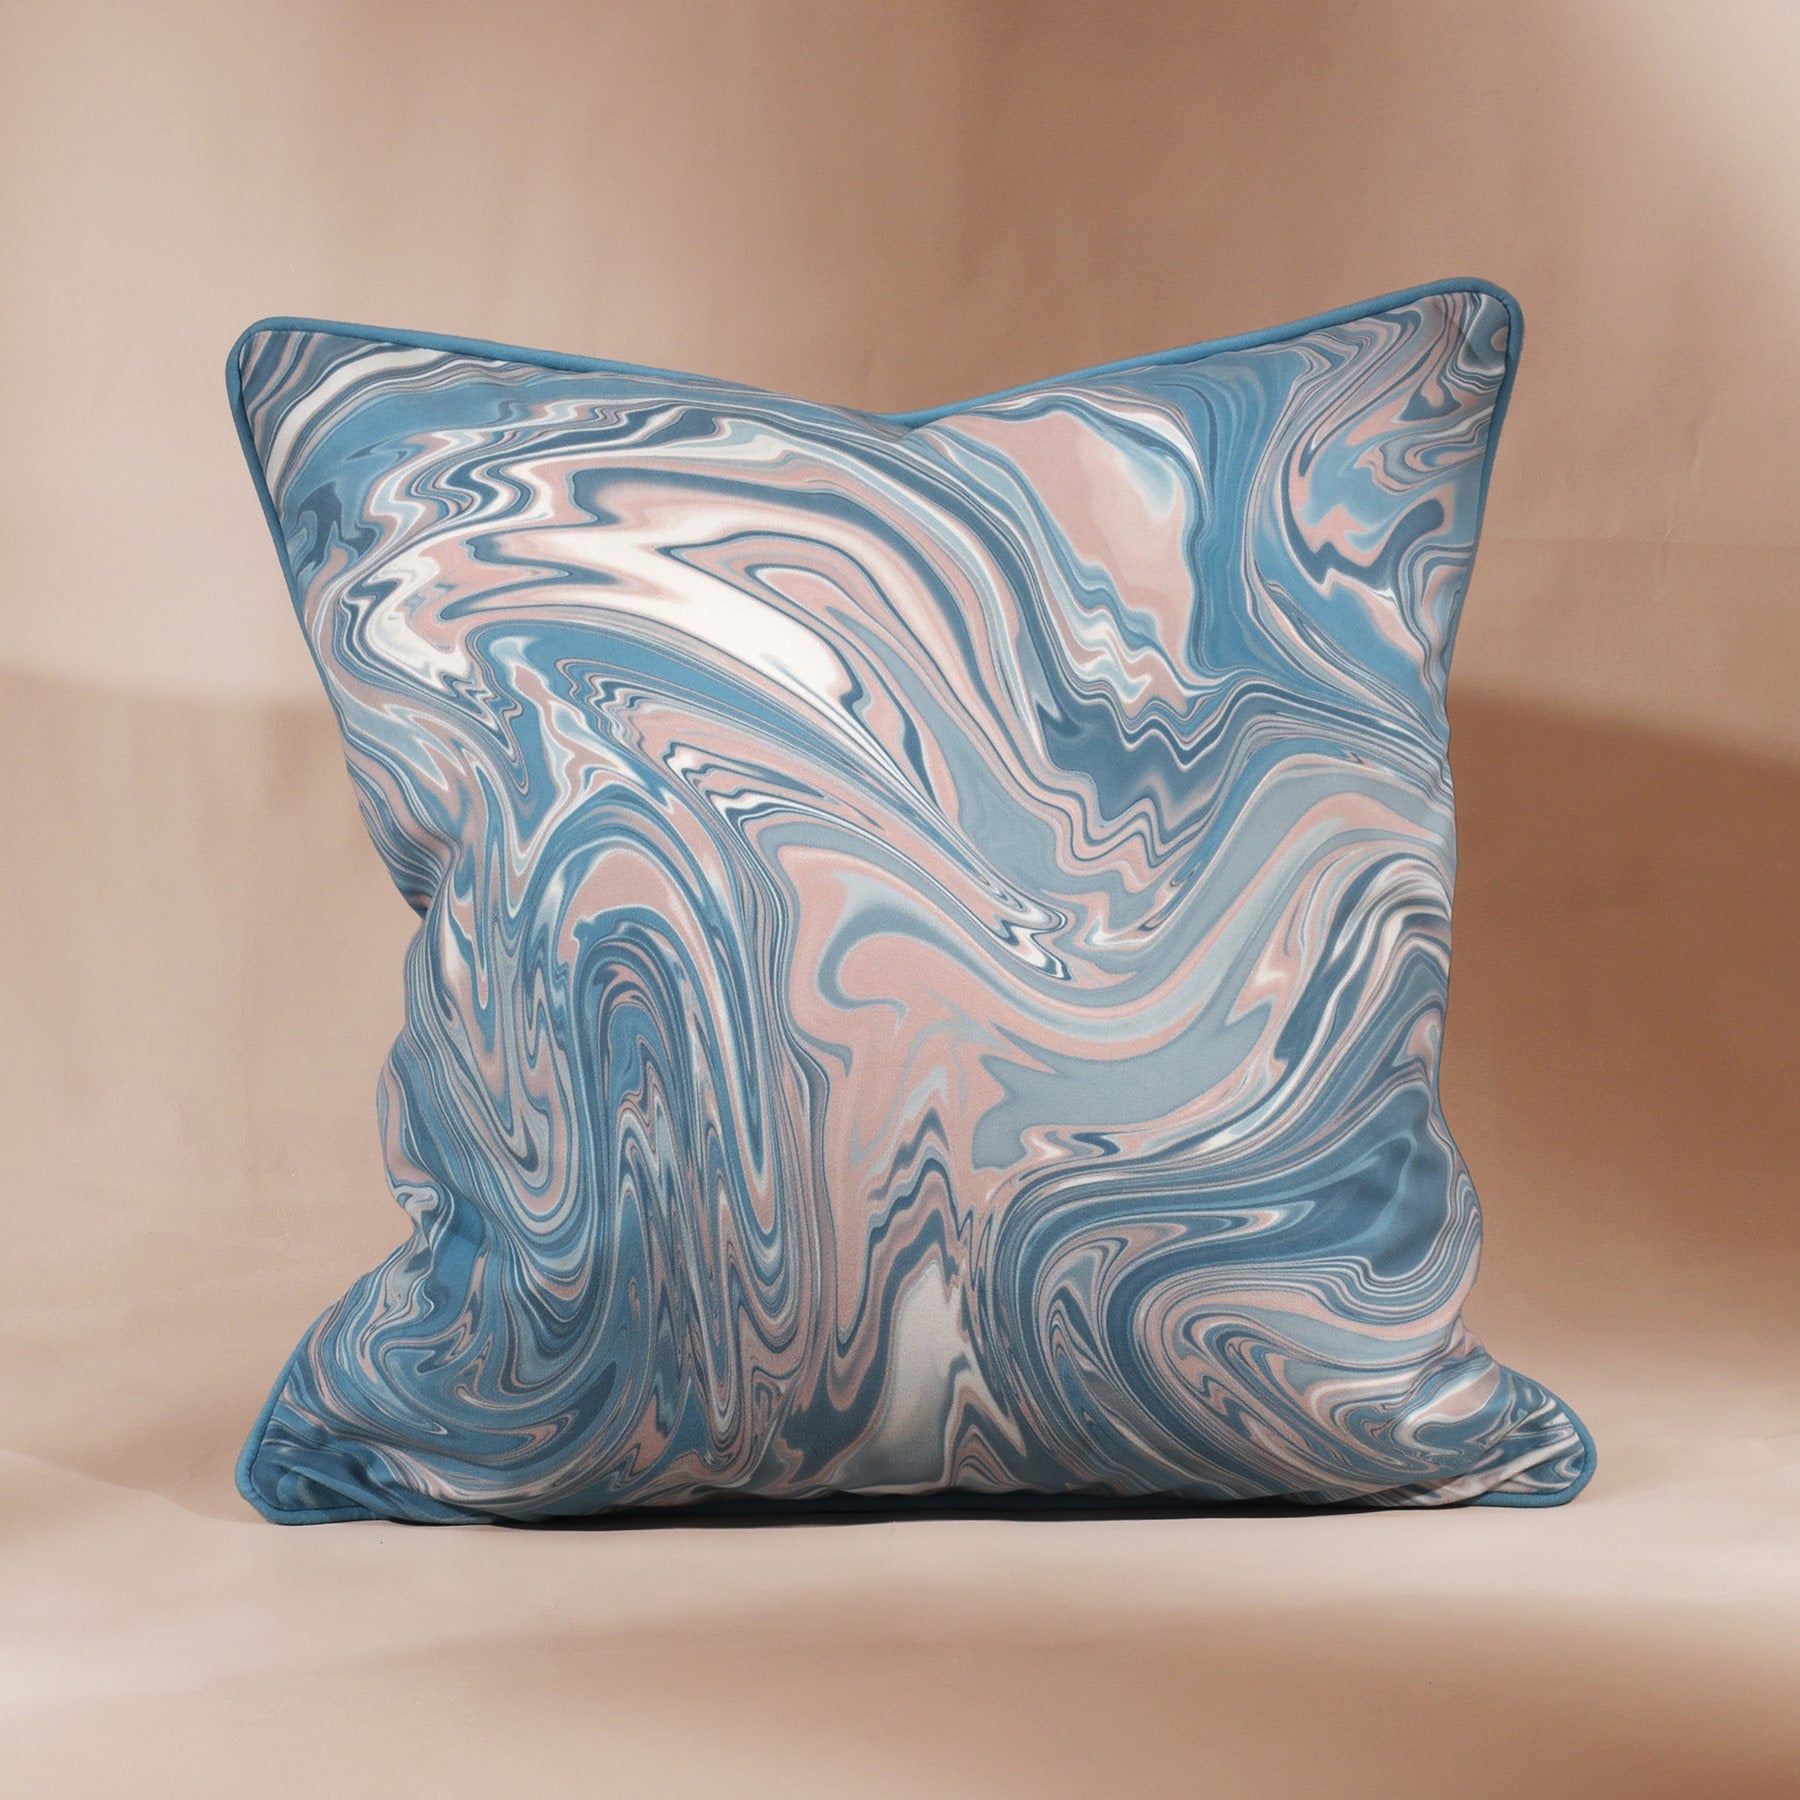 Ripple design cushion